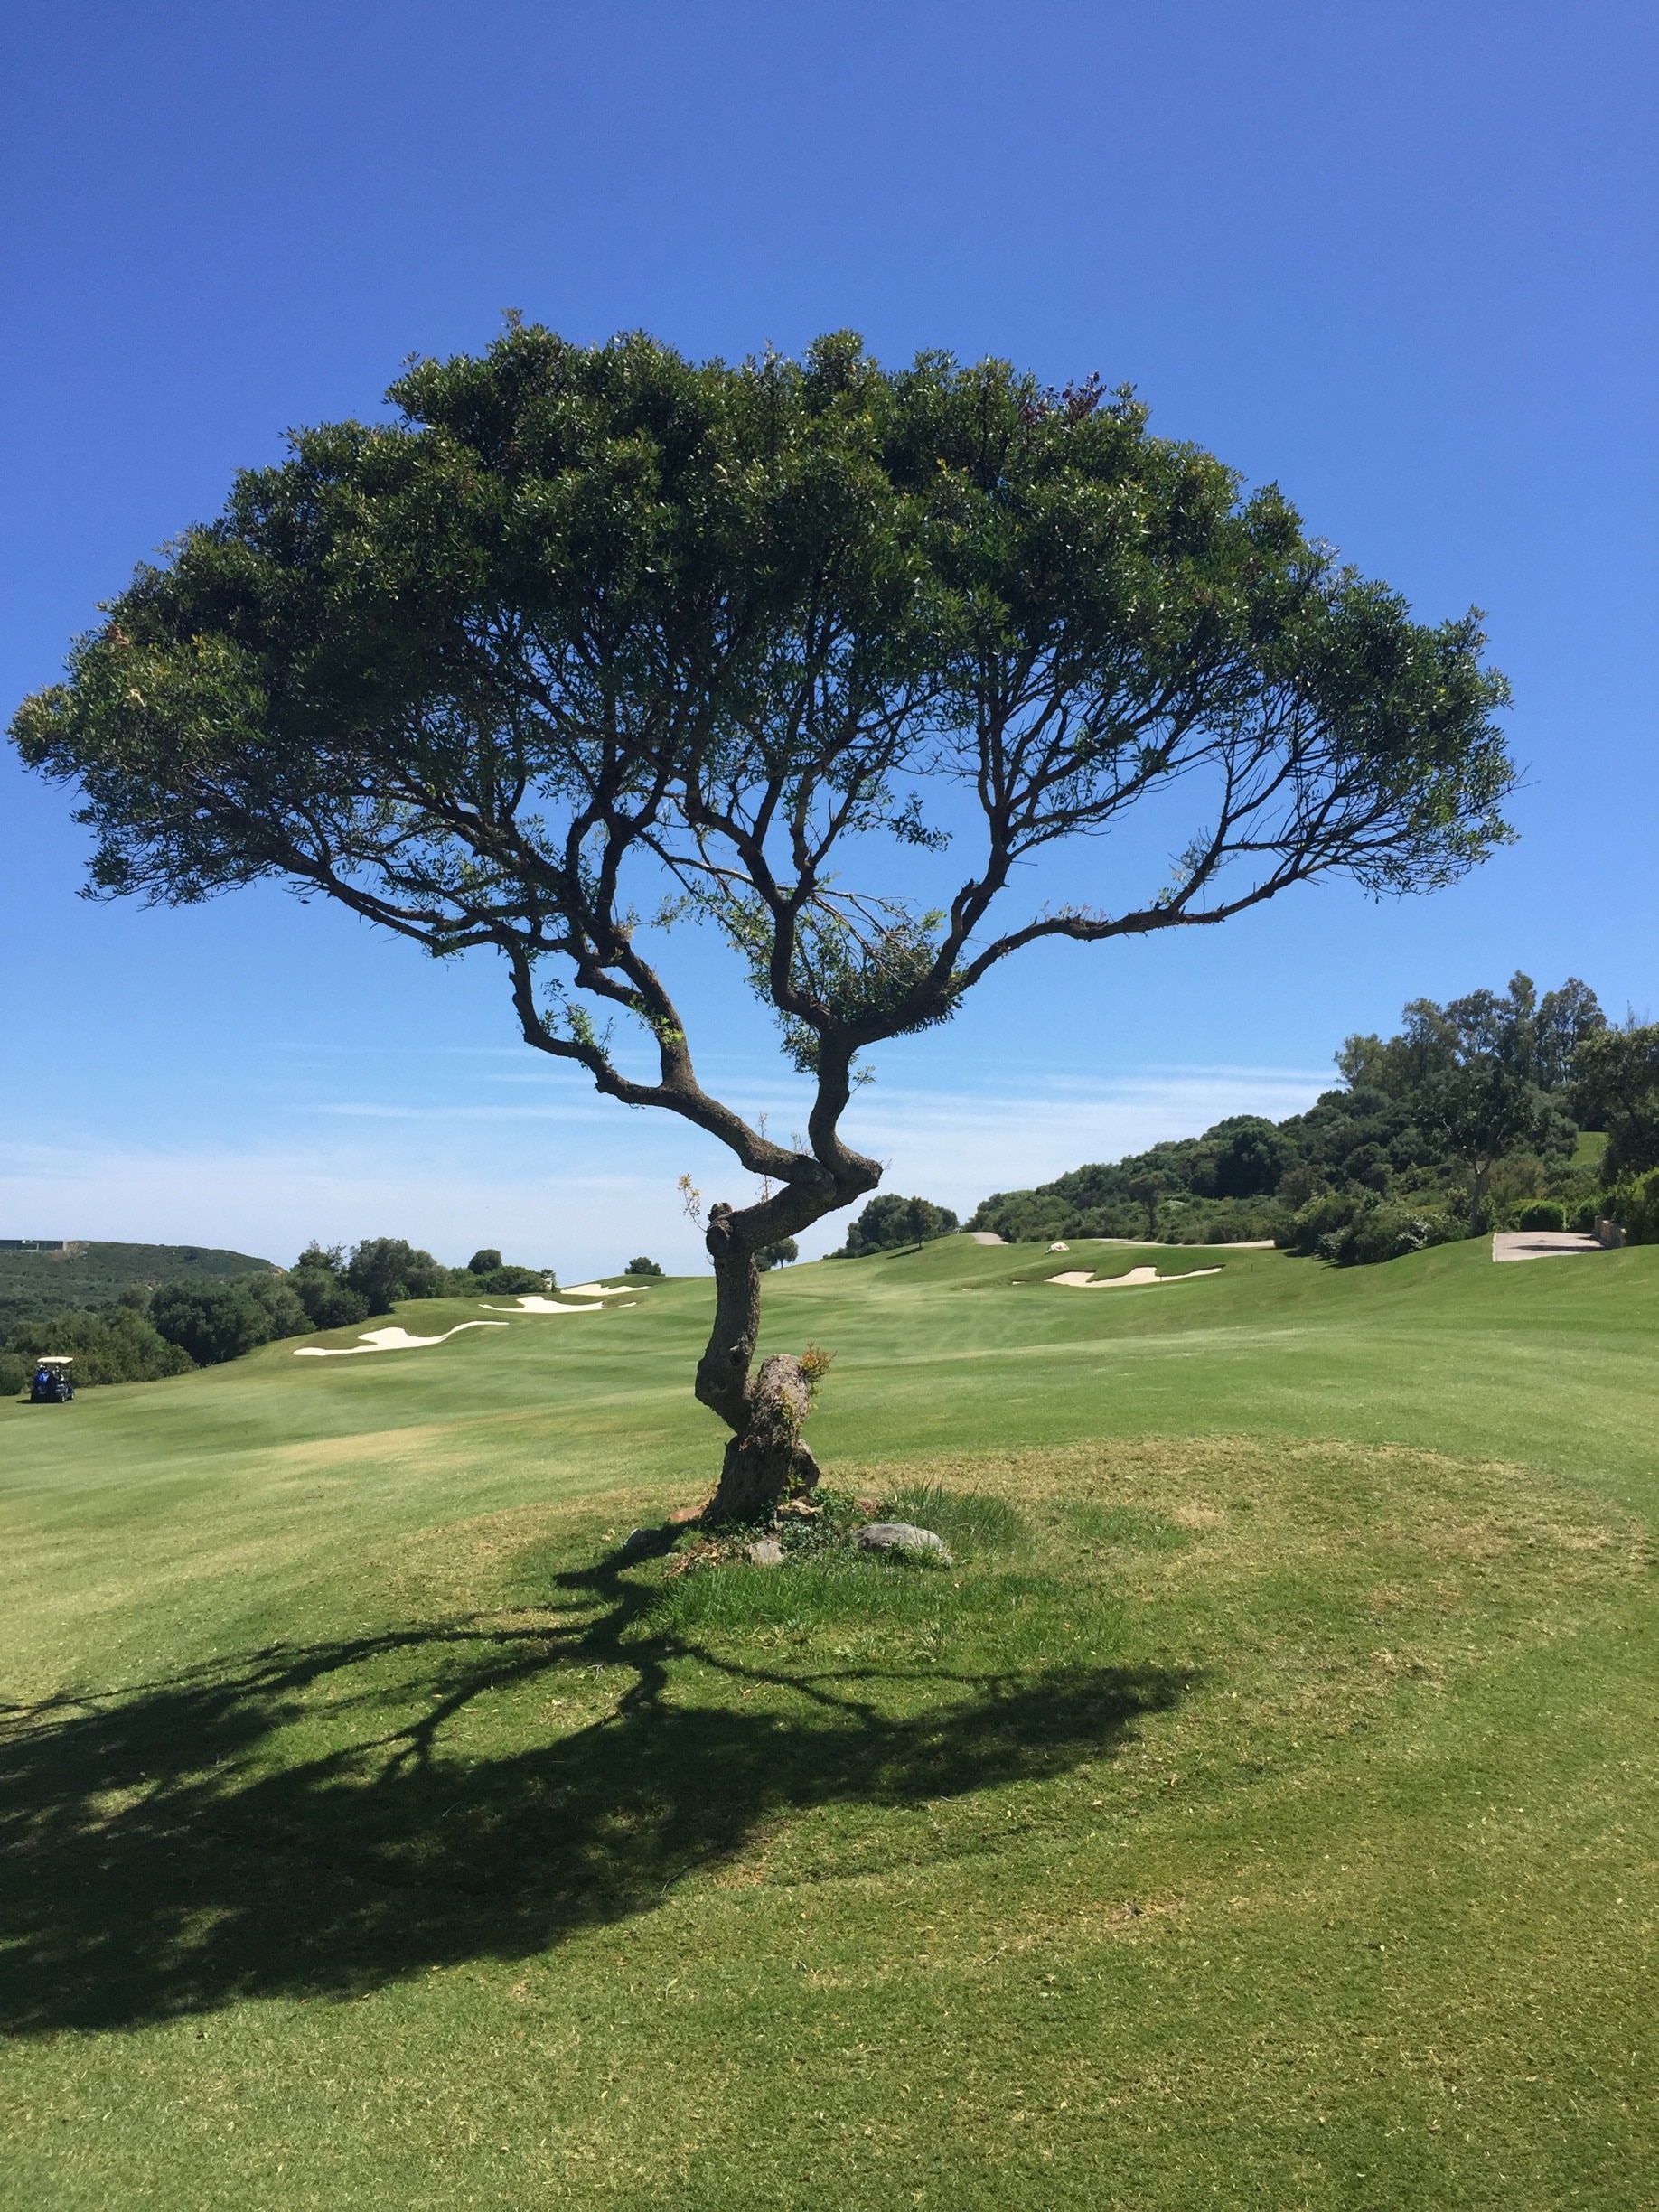 Finca Cortesin Golf Club in Casares - Tours and Activities | Expedia